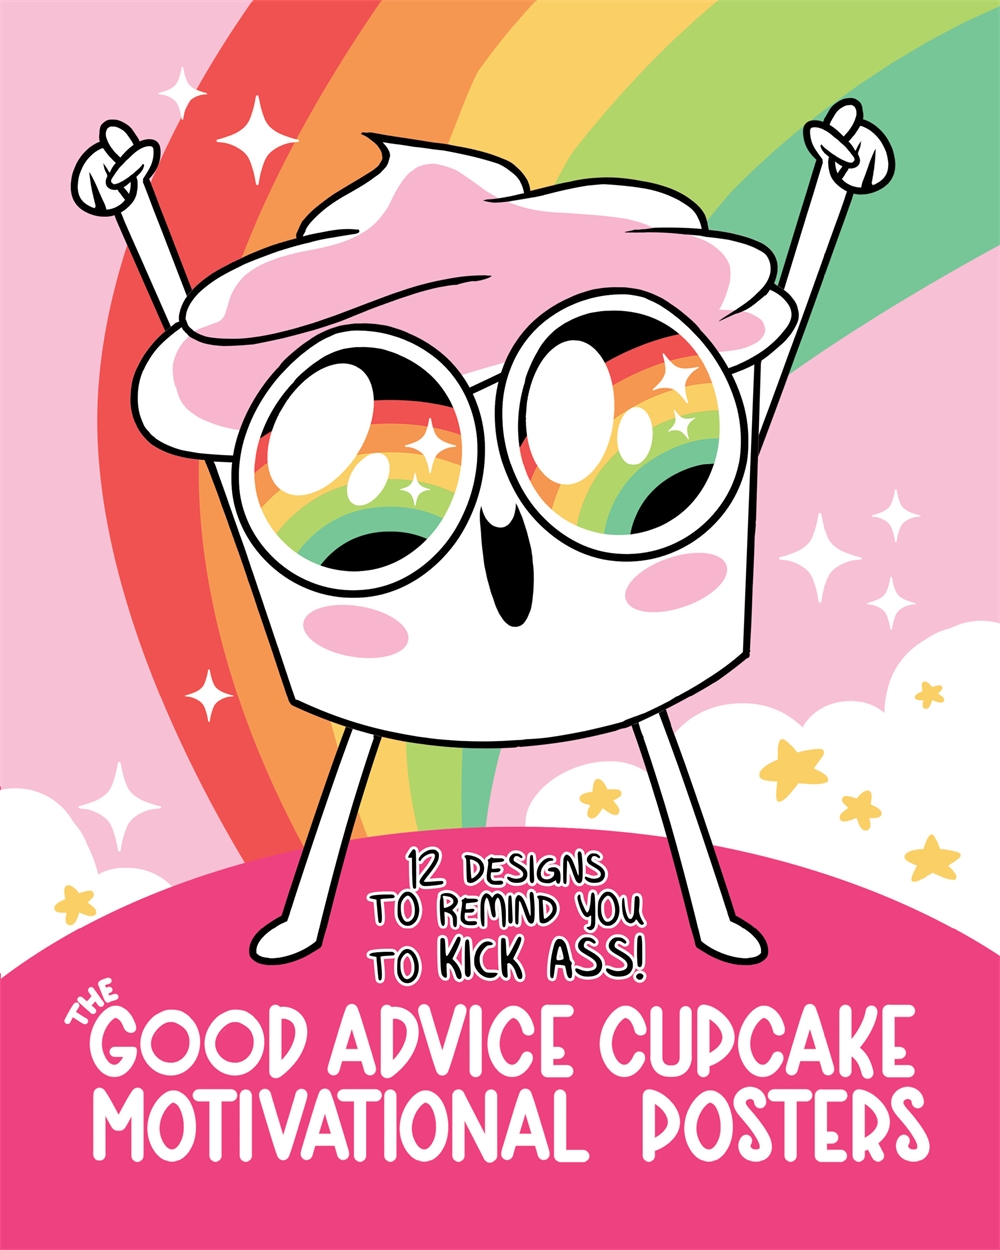 The Good Advice Cupcake Motivational Posters by Loryn Brantz Hachette UK